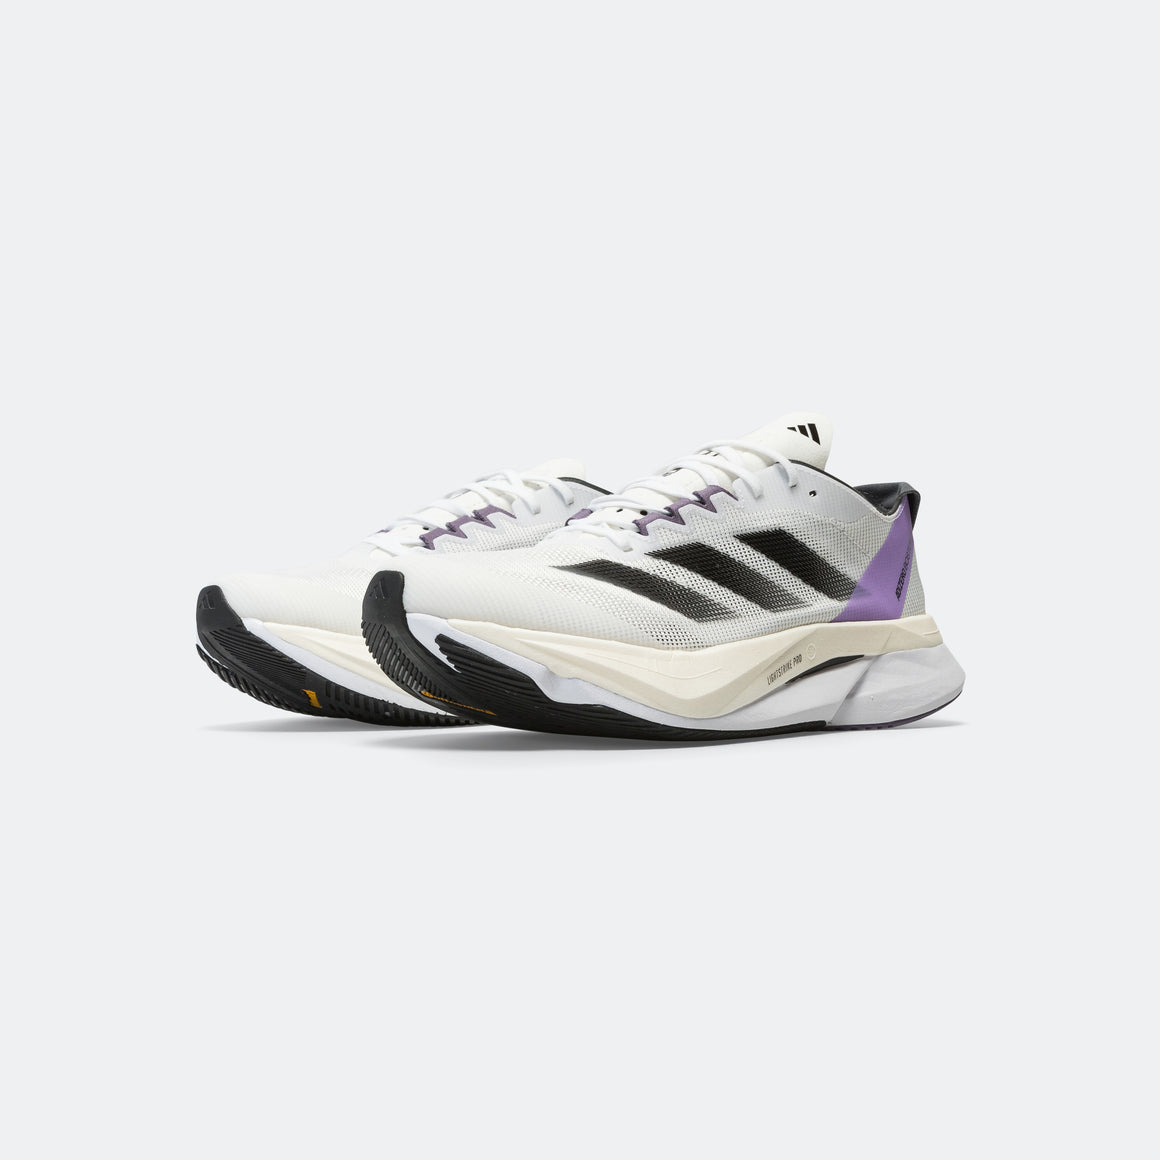 adidas - Womens adizero Boston 12 - Footwear White/Core Black-Shadow Violet - Up There Athletics